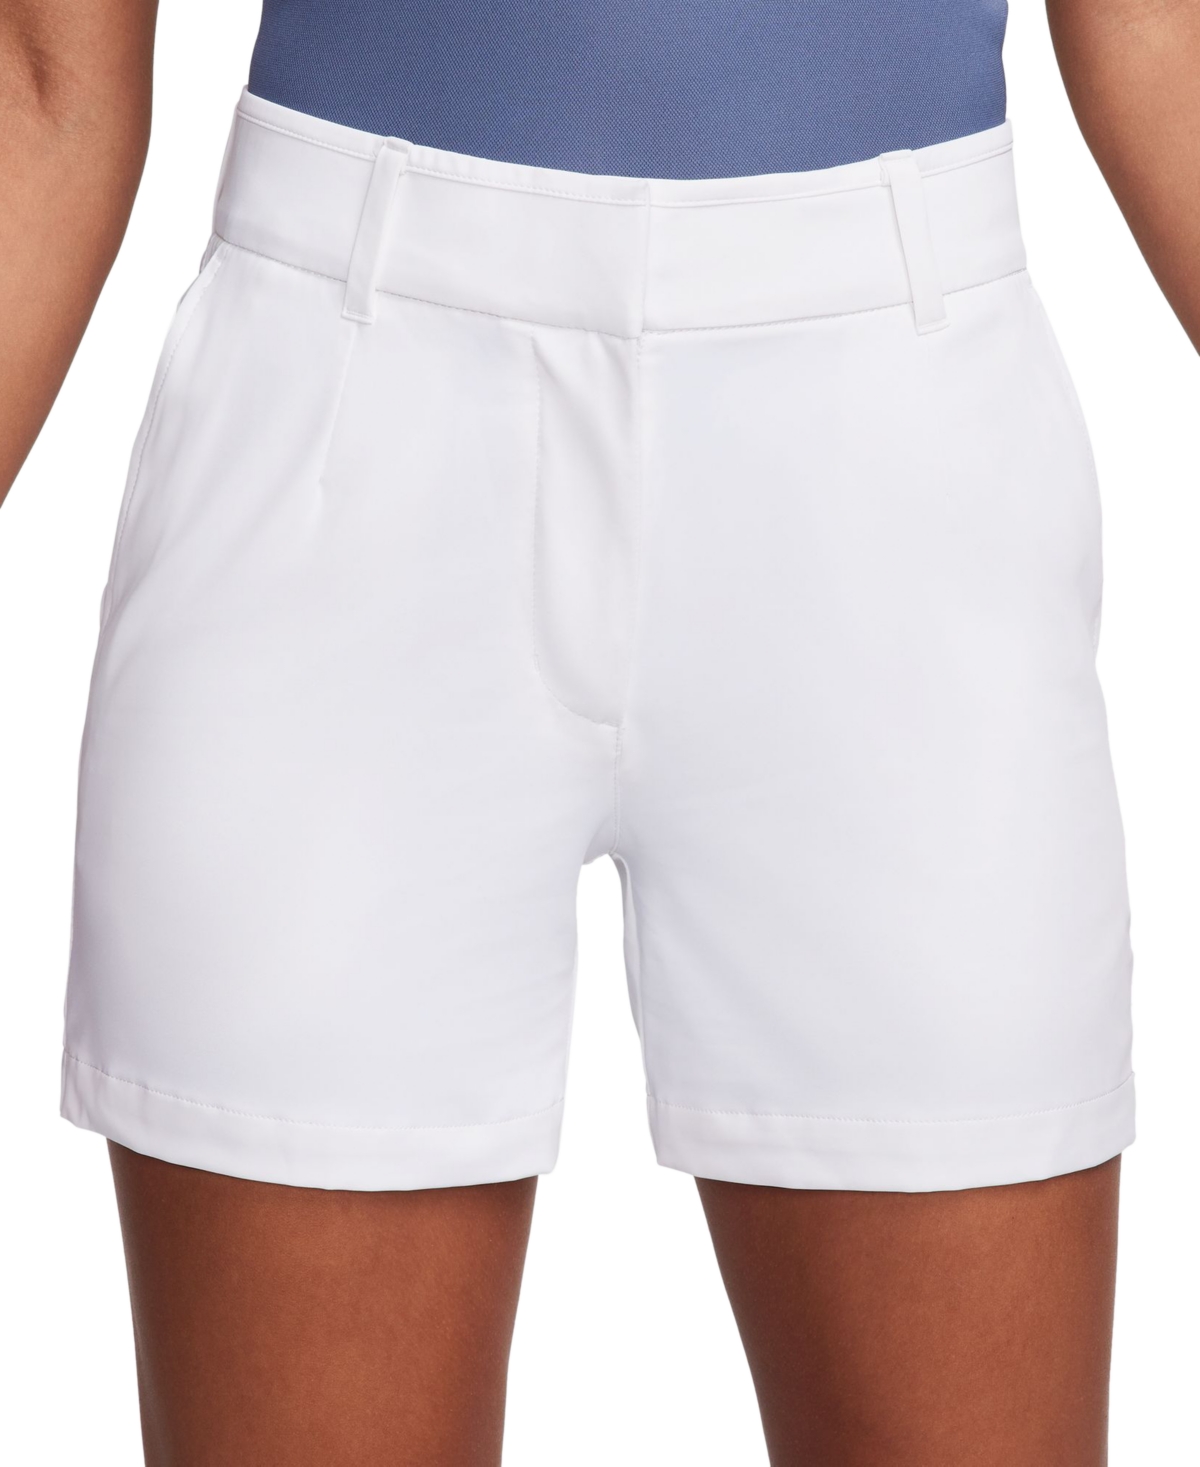 Women's Dri-fit Victory 5" Golf Shorts - White/black